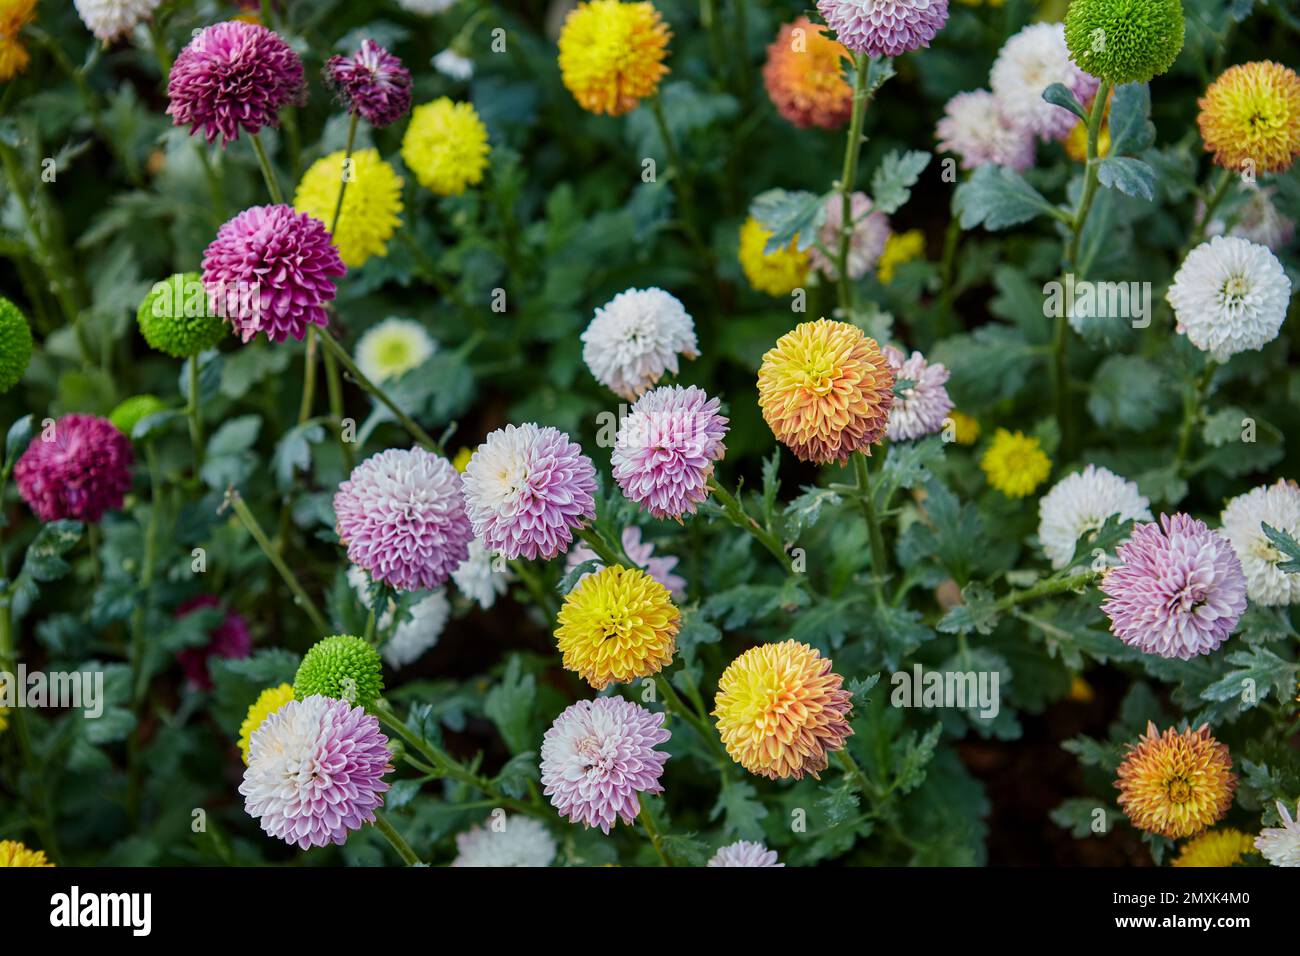 Multicolored Chrysanthemum or pom pom flower blossom in the garden Stock Photo